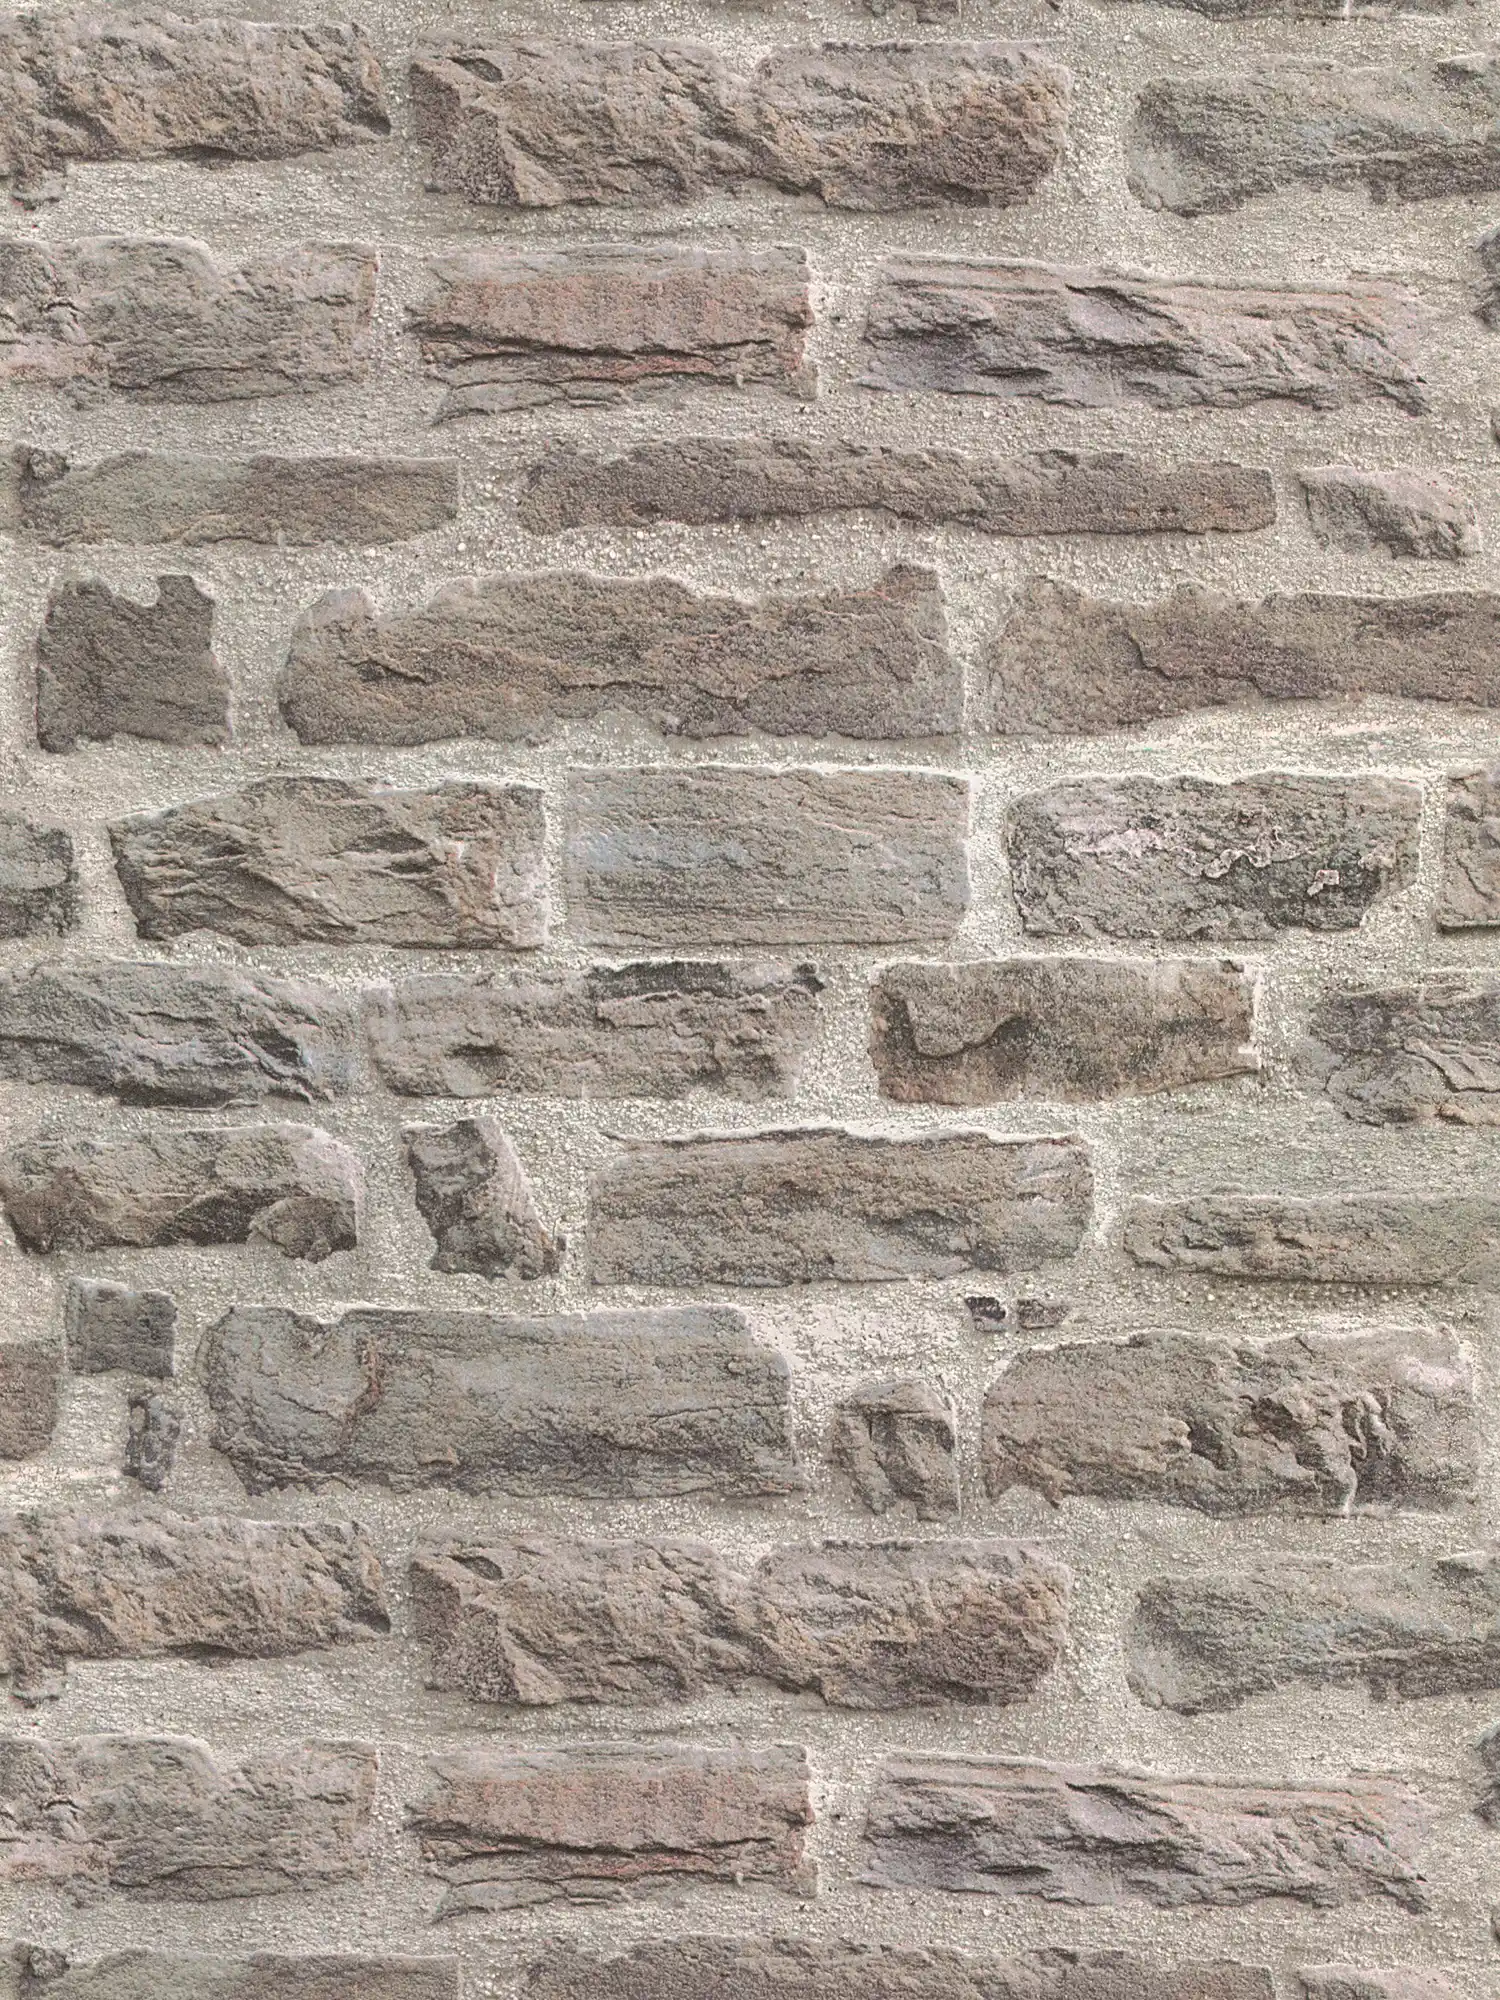 Papel pintado de piedra natural con aspecto de pared realista - gris, marrón
